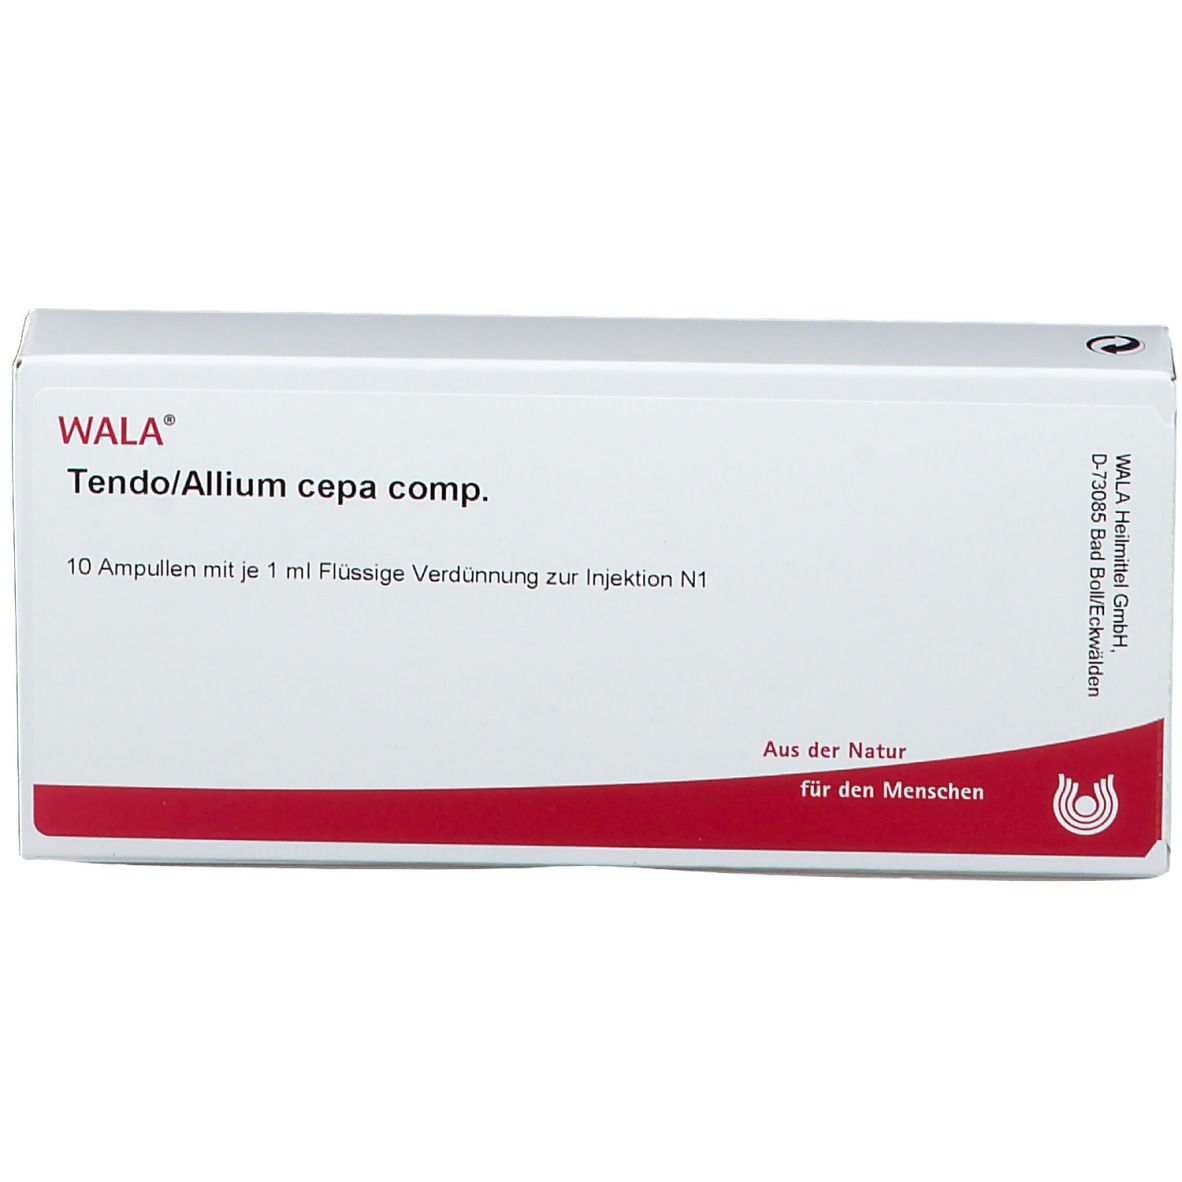 WALA® TENDO/ Allium Cepa comp. Ampullen